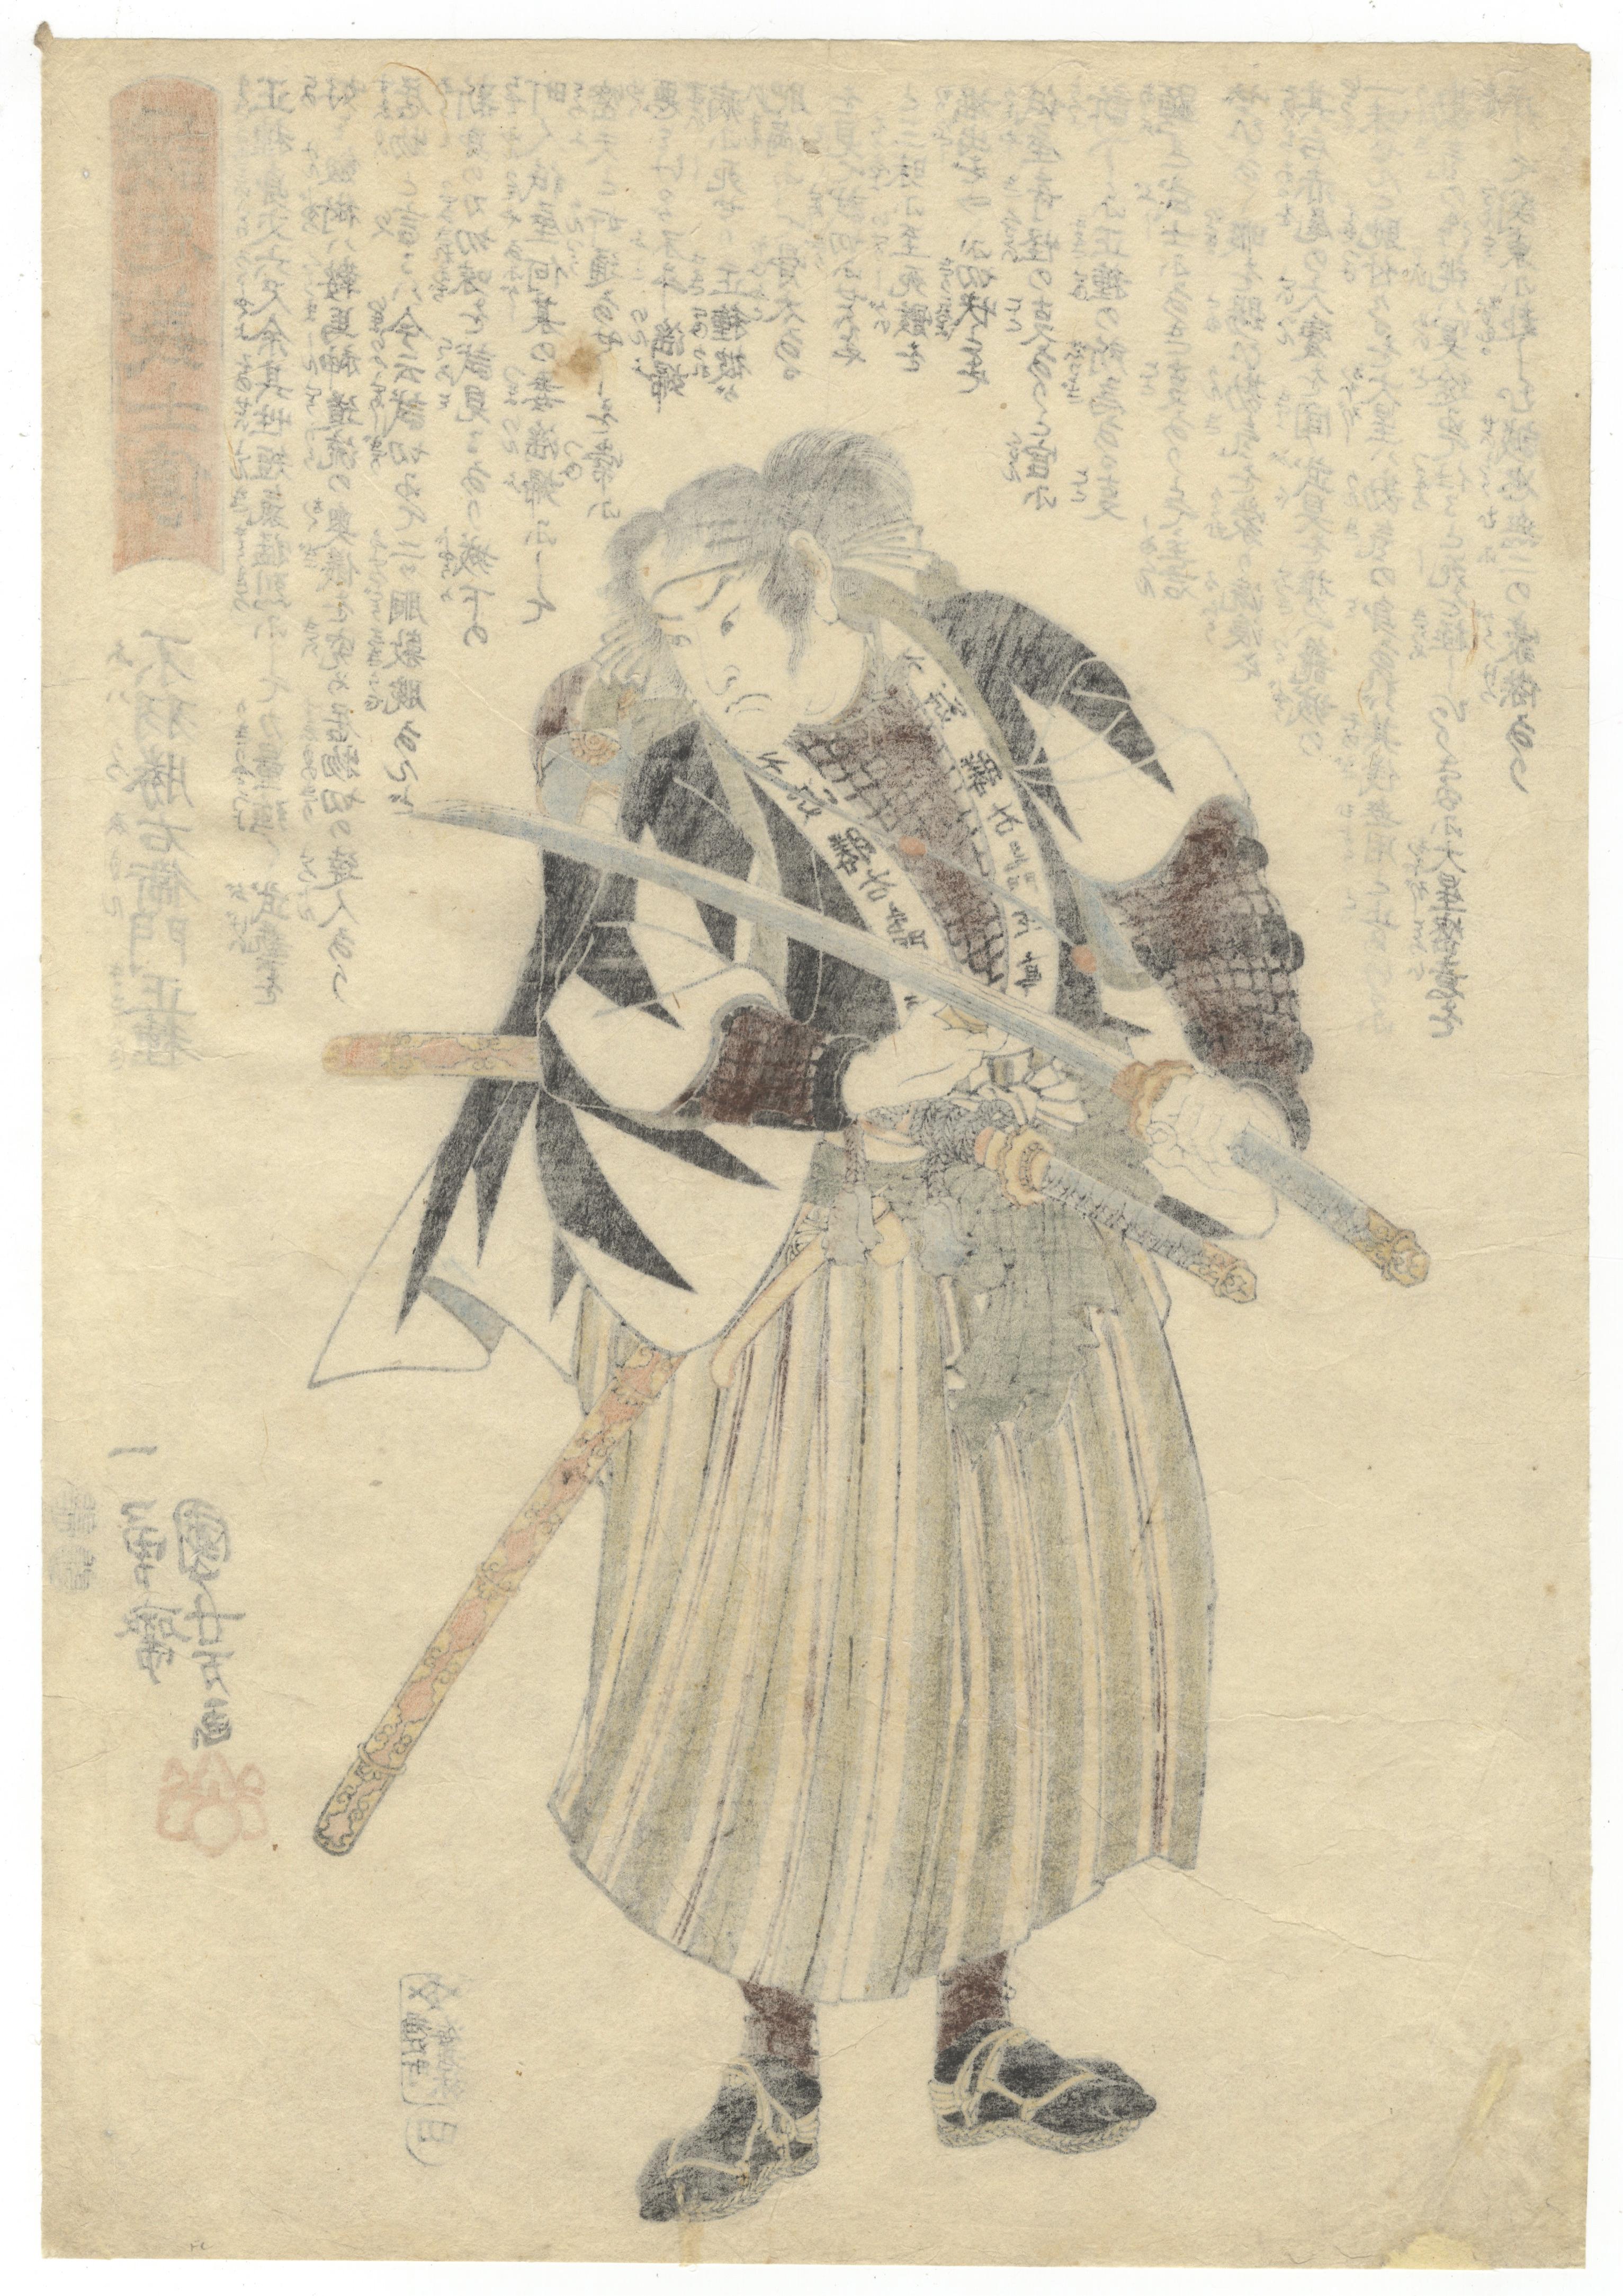 Artist: Kuniyoshi Utagawa (1798-1861)
Title: 4. Fuwa Katsuemon Masatane
Series: Stories of the True Loyalty of the Faithful Samurai 
Publisher: Ebiya Rinnosuke
Date: 1847-1848
Dimensions: 35.6 x 24.8 cm
Condition: Some restored wormholes at